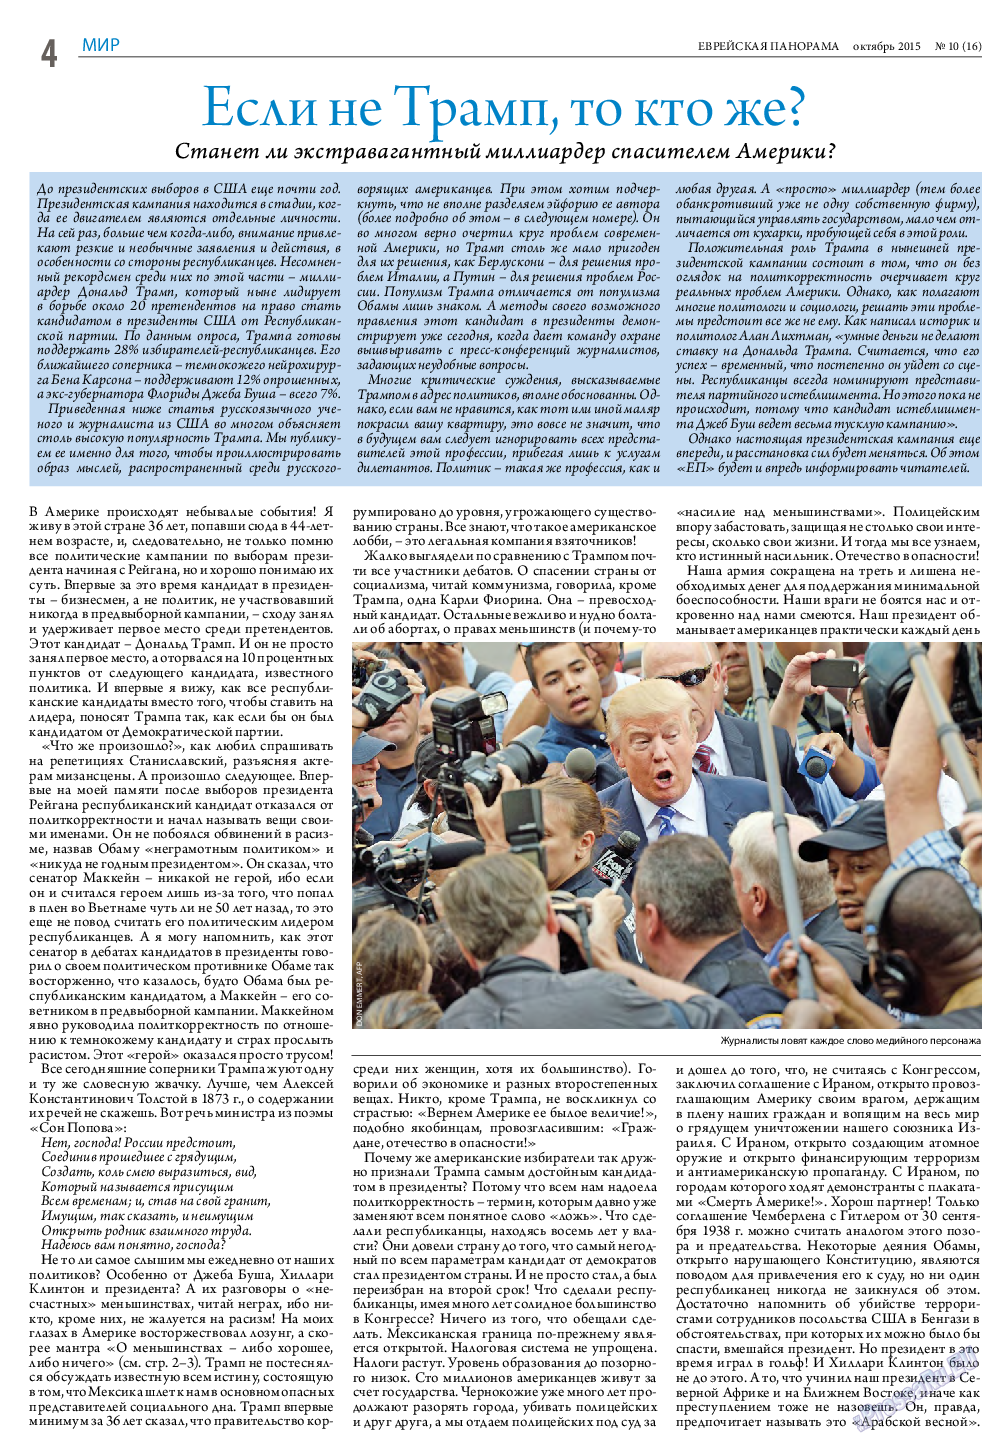 Еврейская панорама, газета. 2015 №10 стр.4